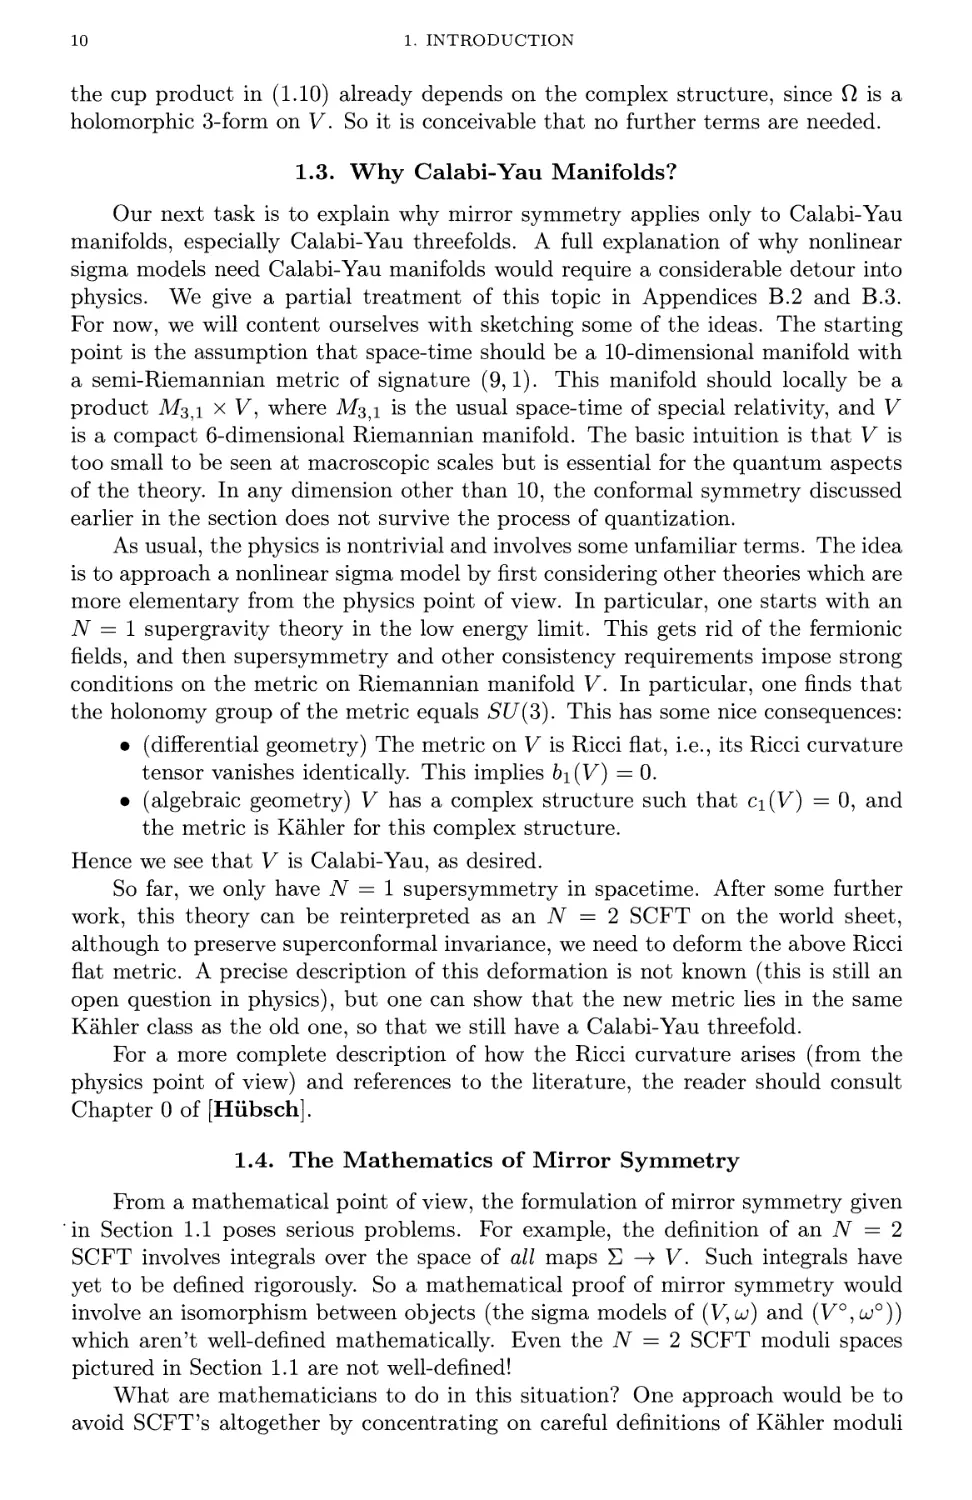 1.3. Why Calabi-Yau Manifolds?
1.4. The Mathematics of Mirror Symmetry